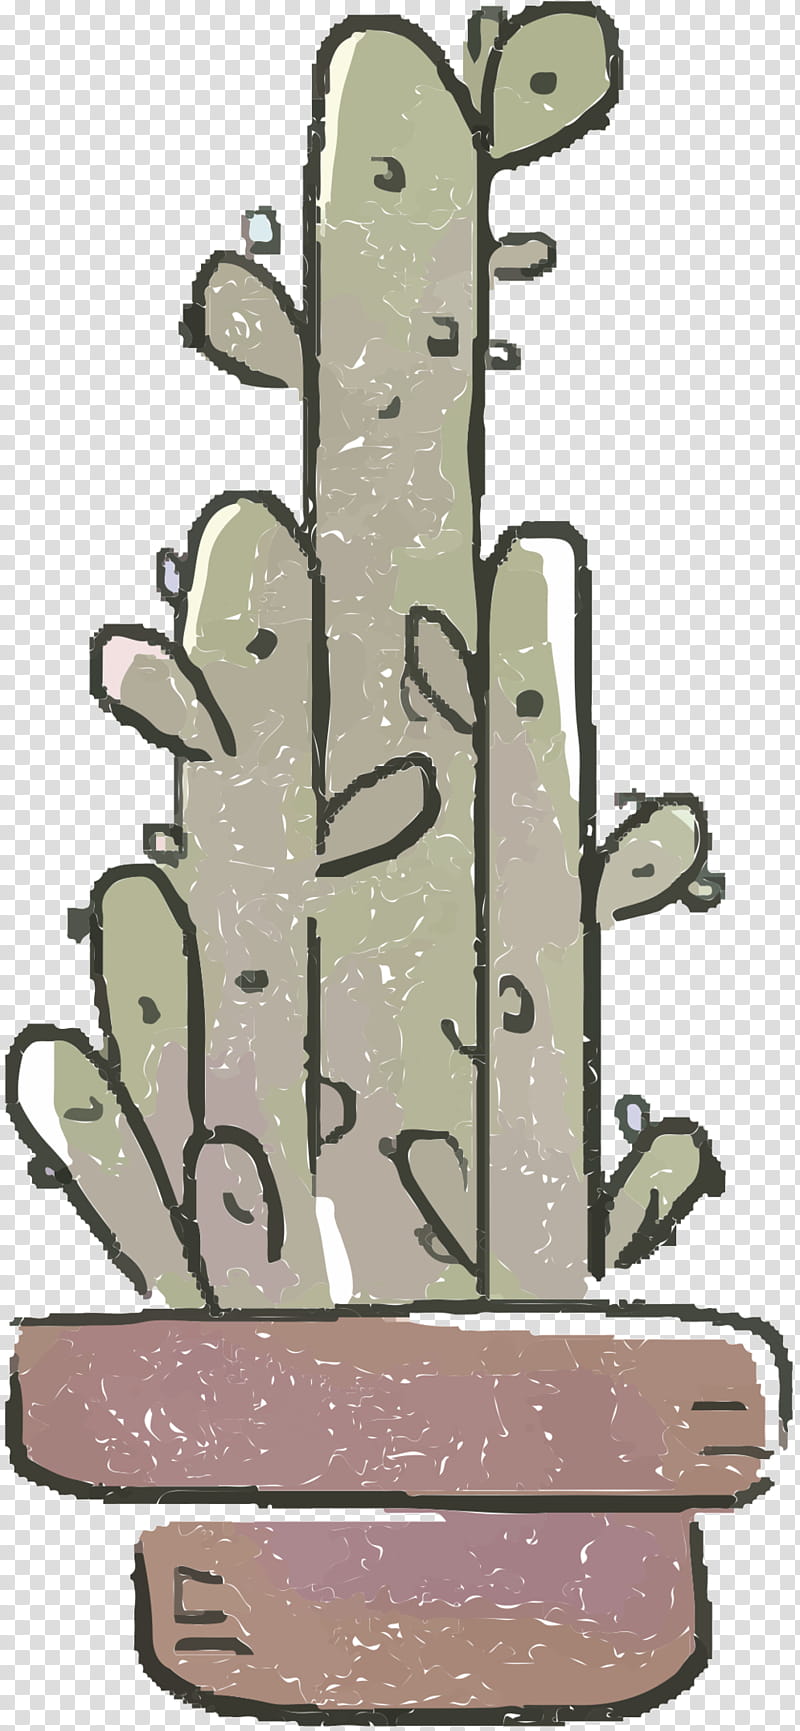 Cactus, Cartoon, Plant, Tree, Saguaro, Succulent Plant, Caryophyllales transparent background PNG clipart